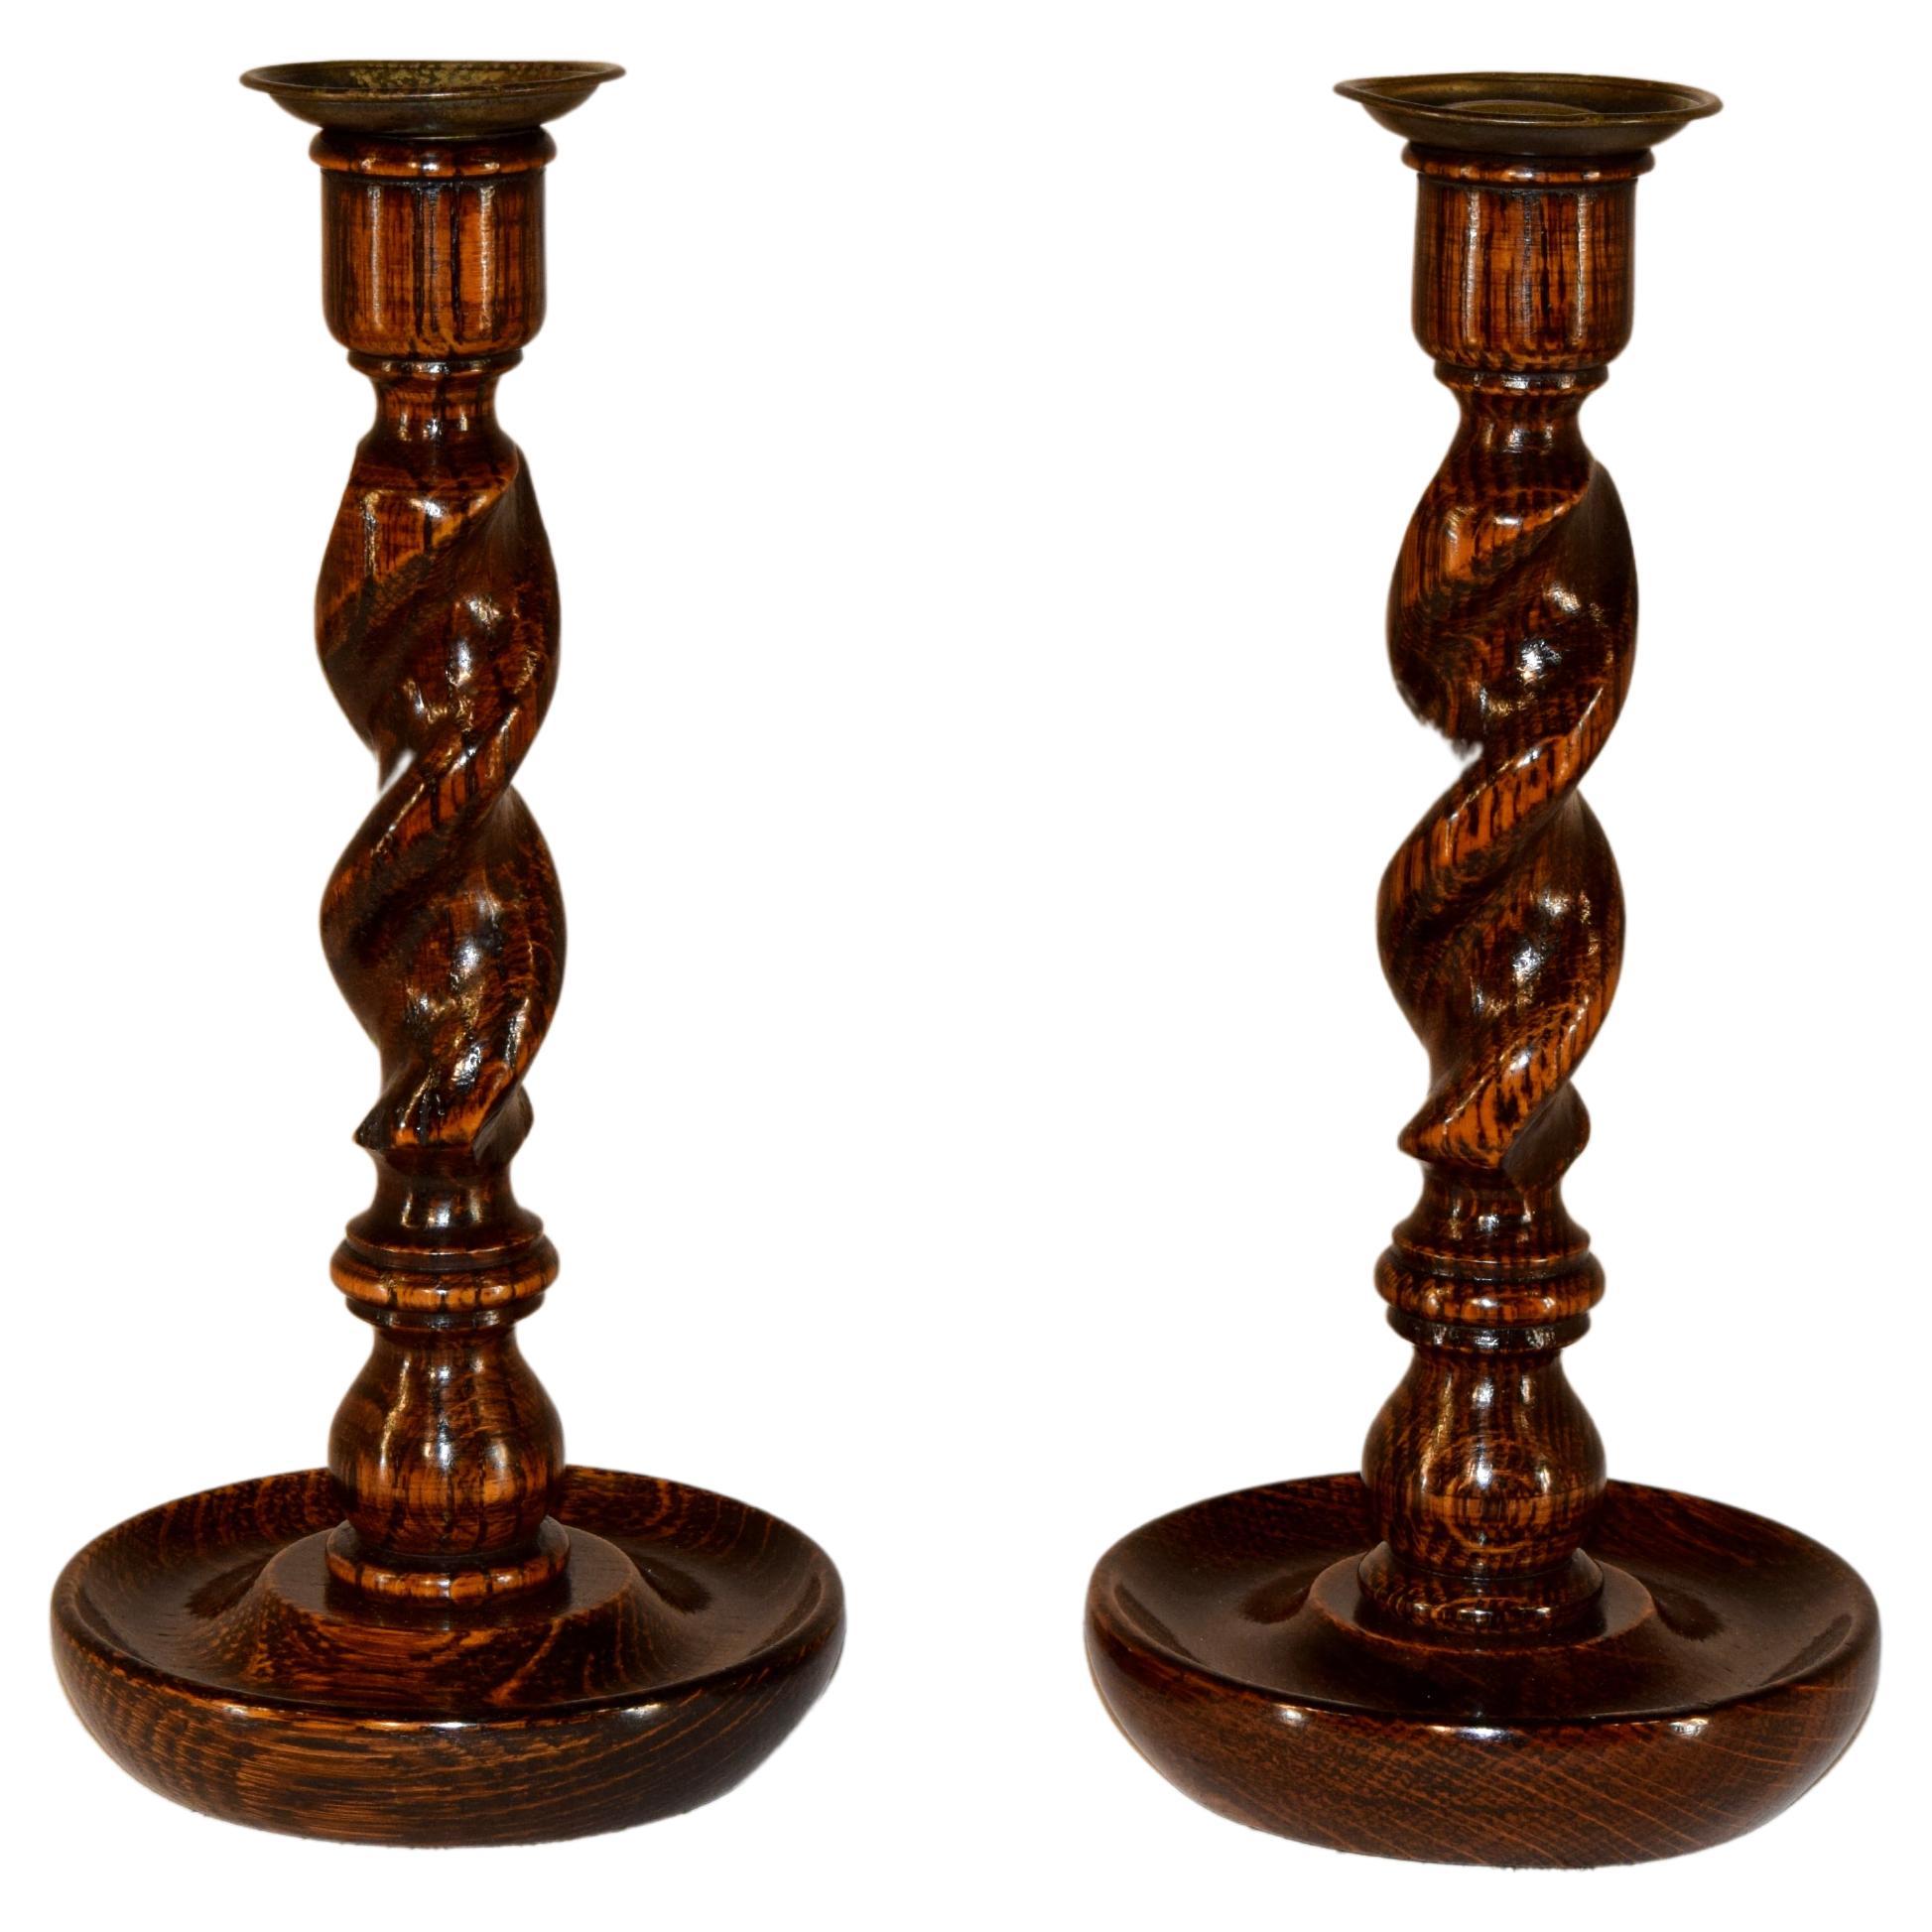 Pair of 19th Century Turned Oak Candlesticks